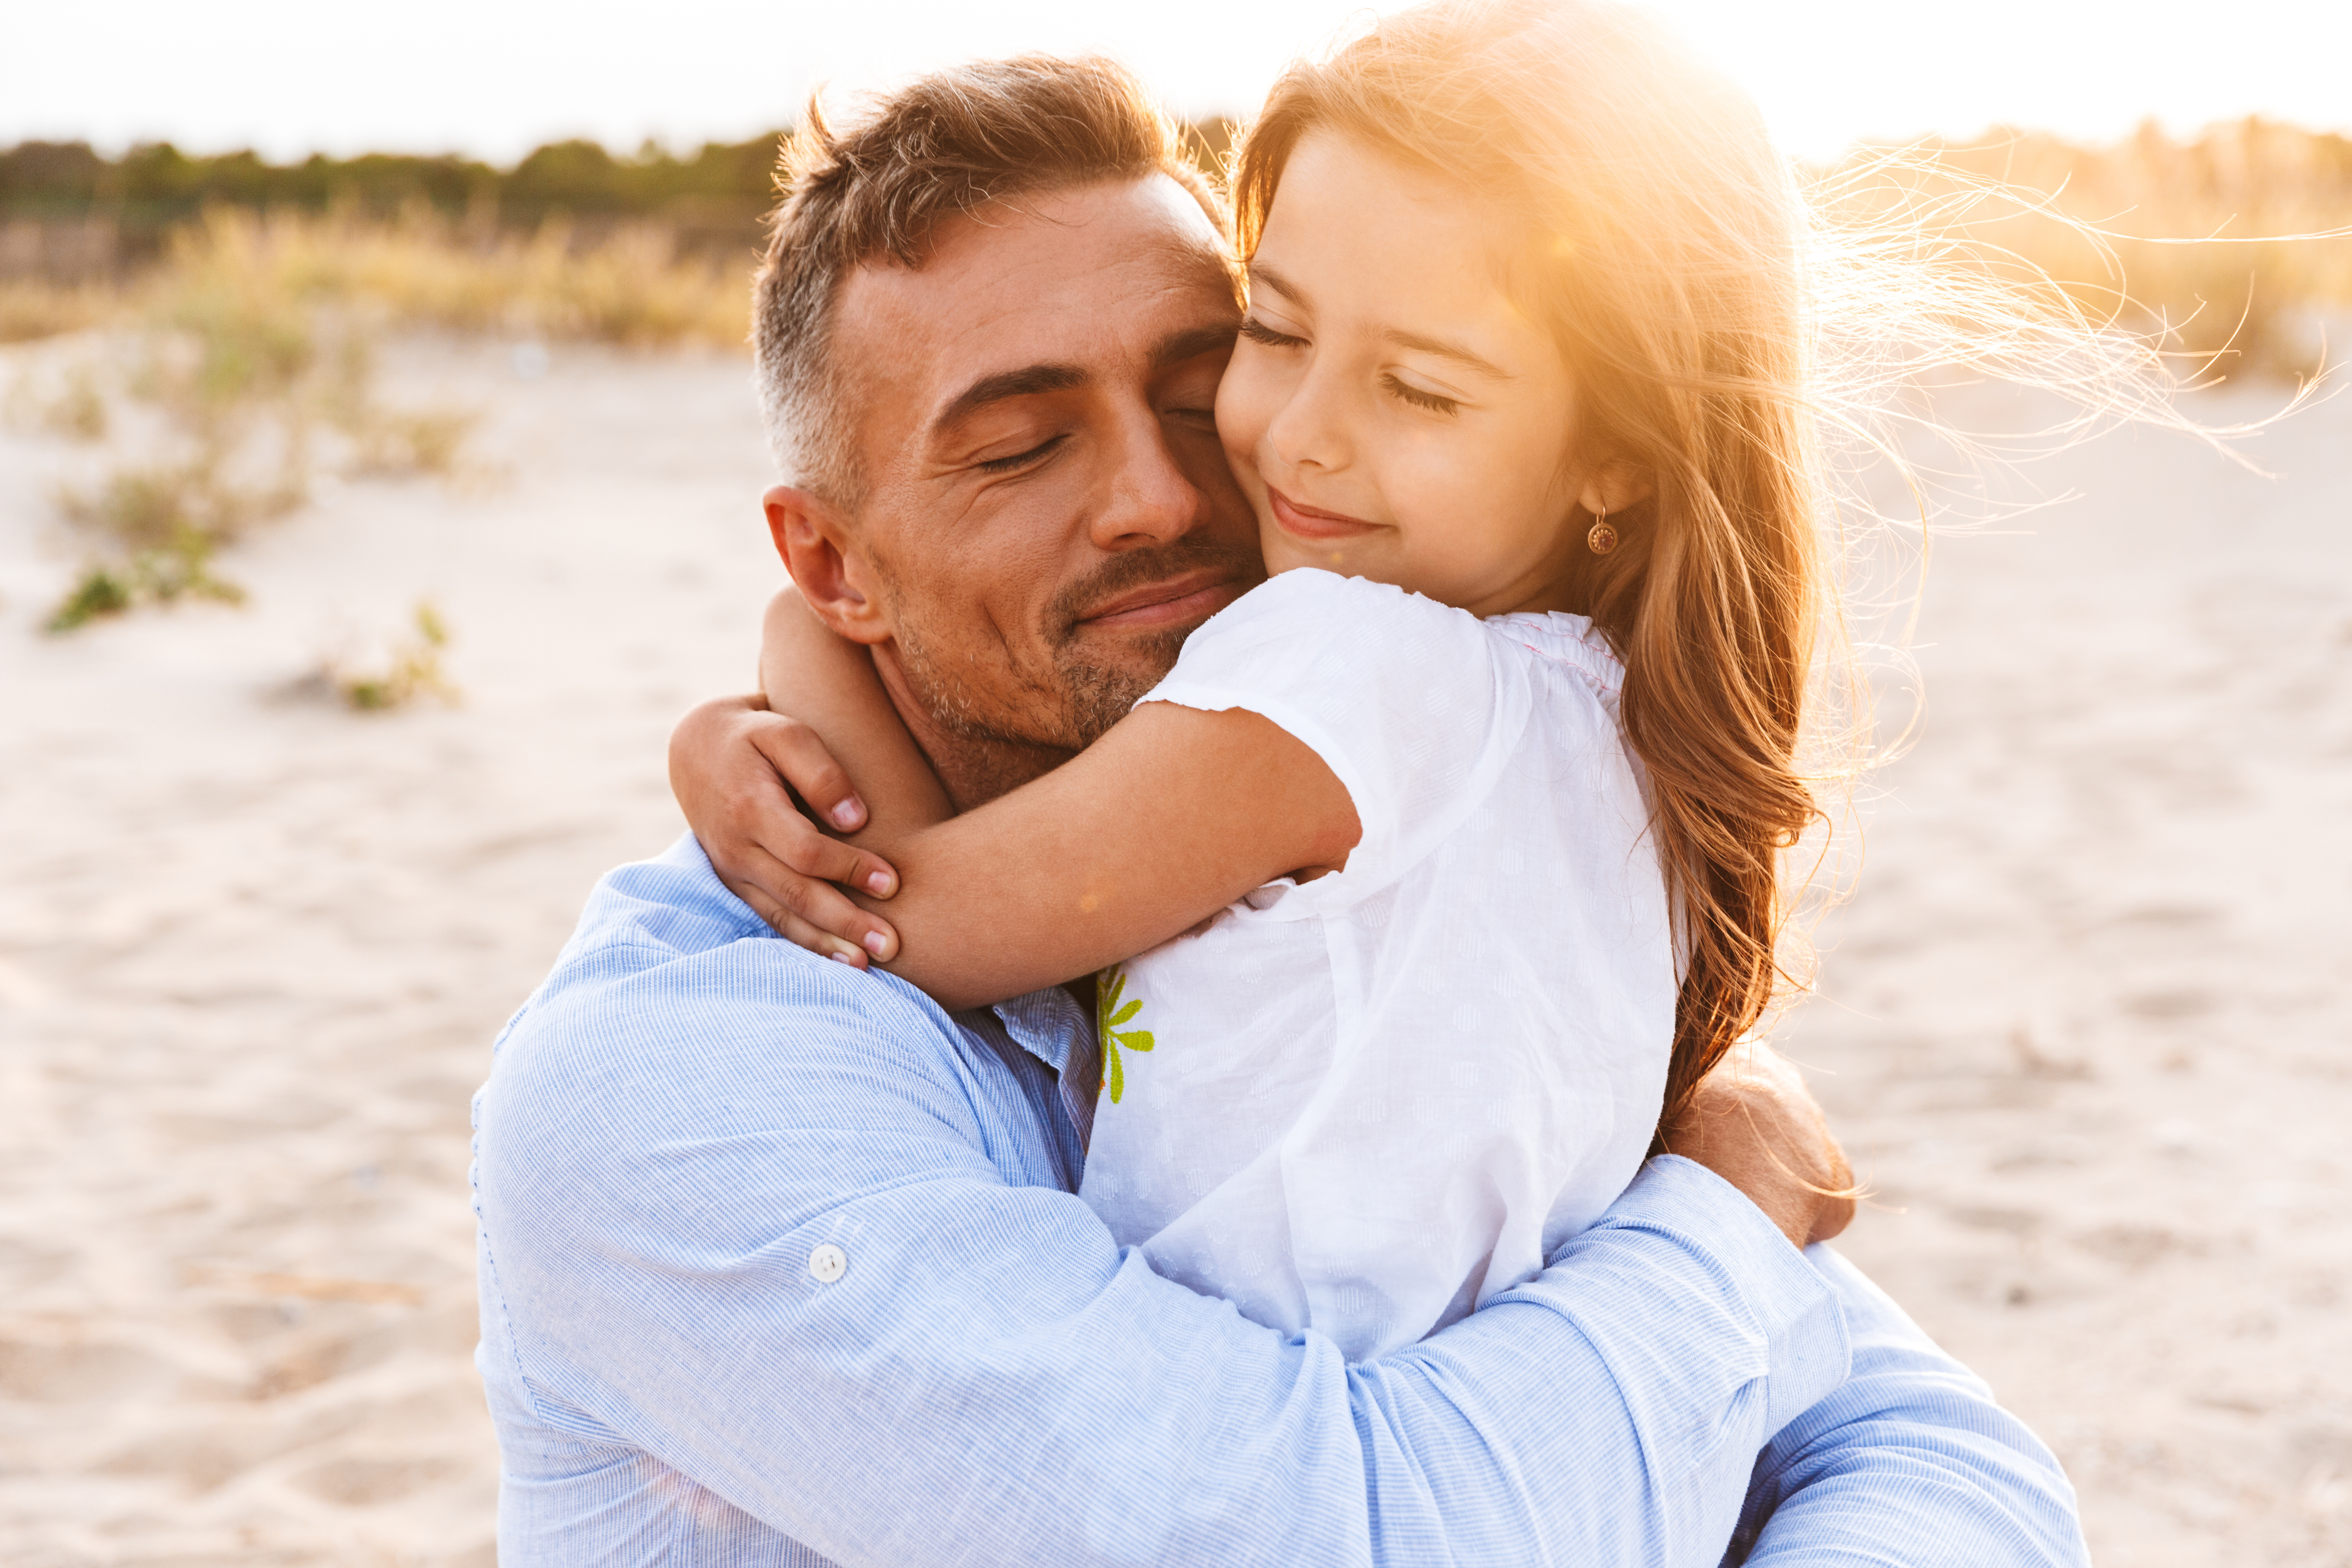 Man hugs his daughter | Source: Shutterstock